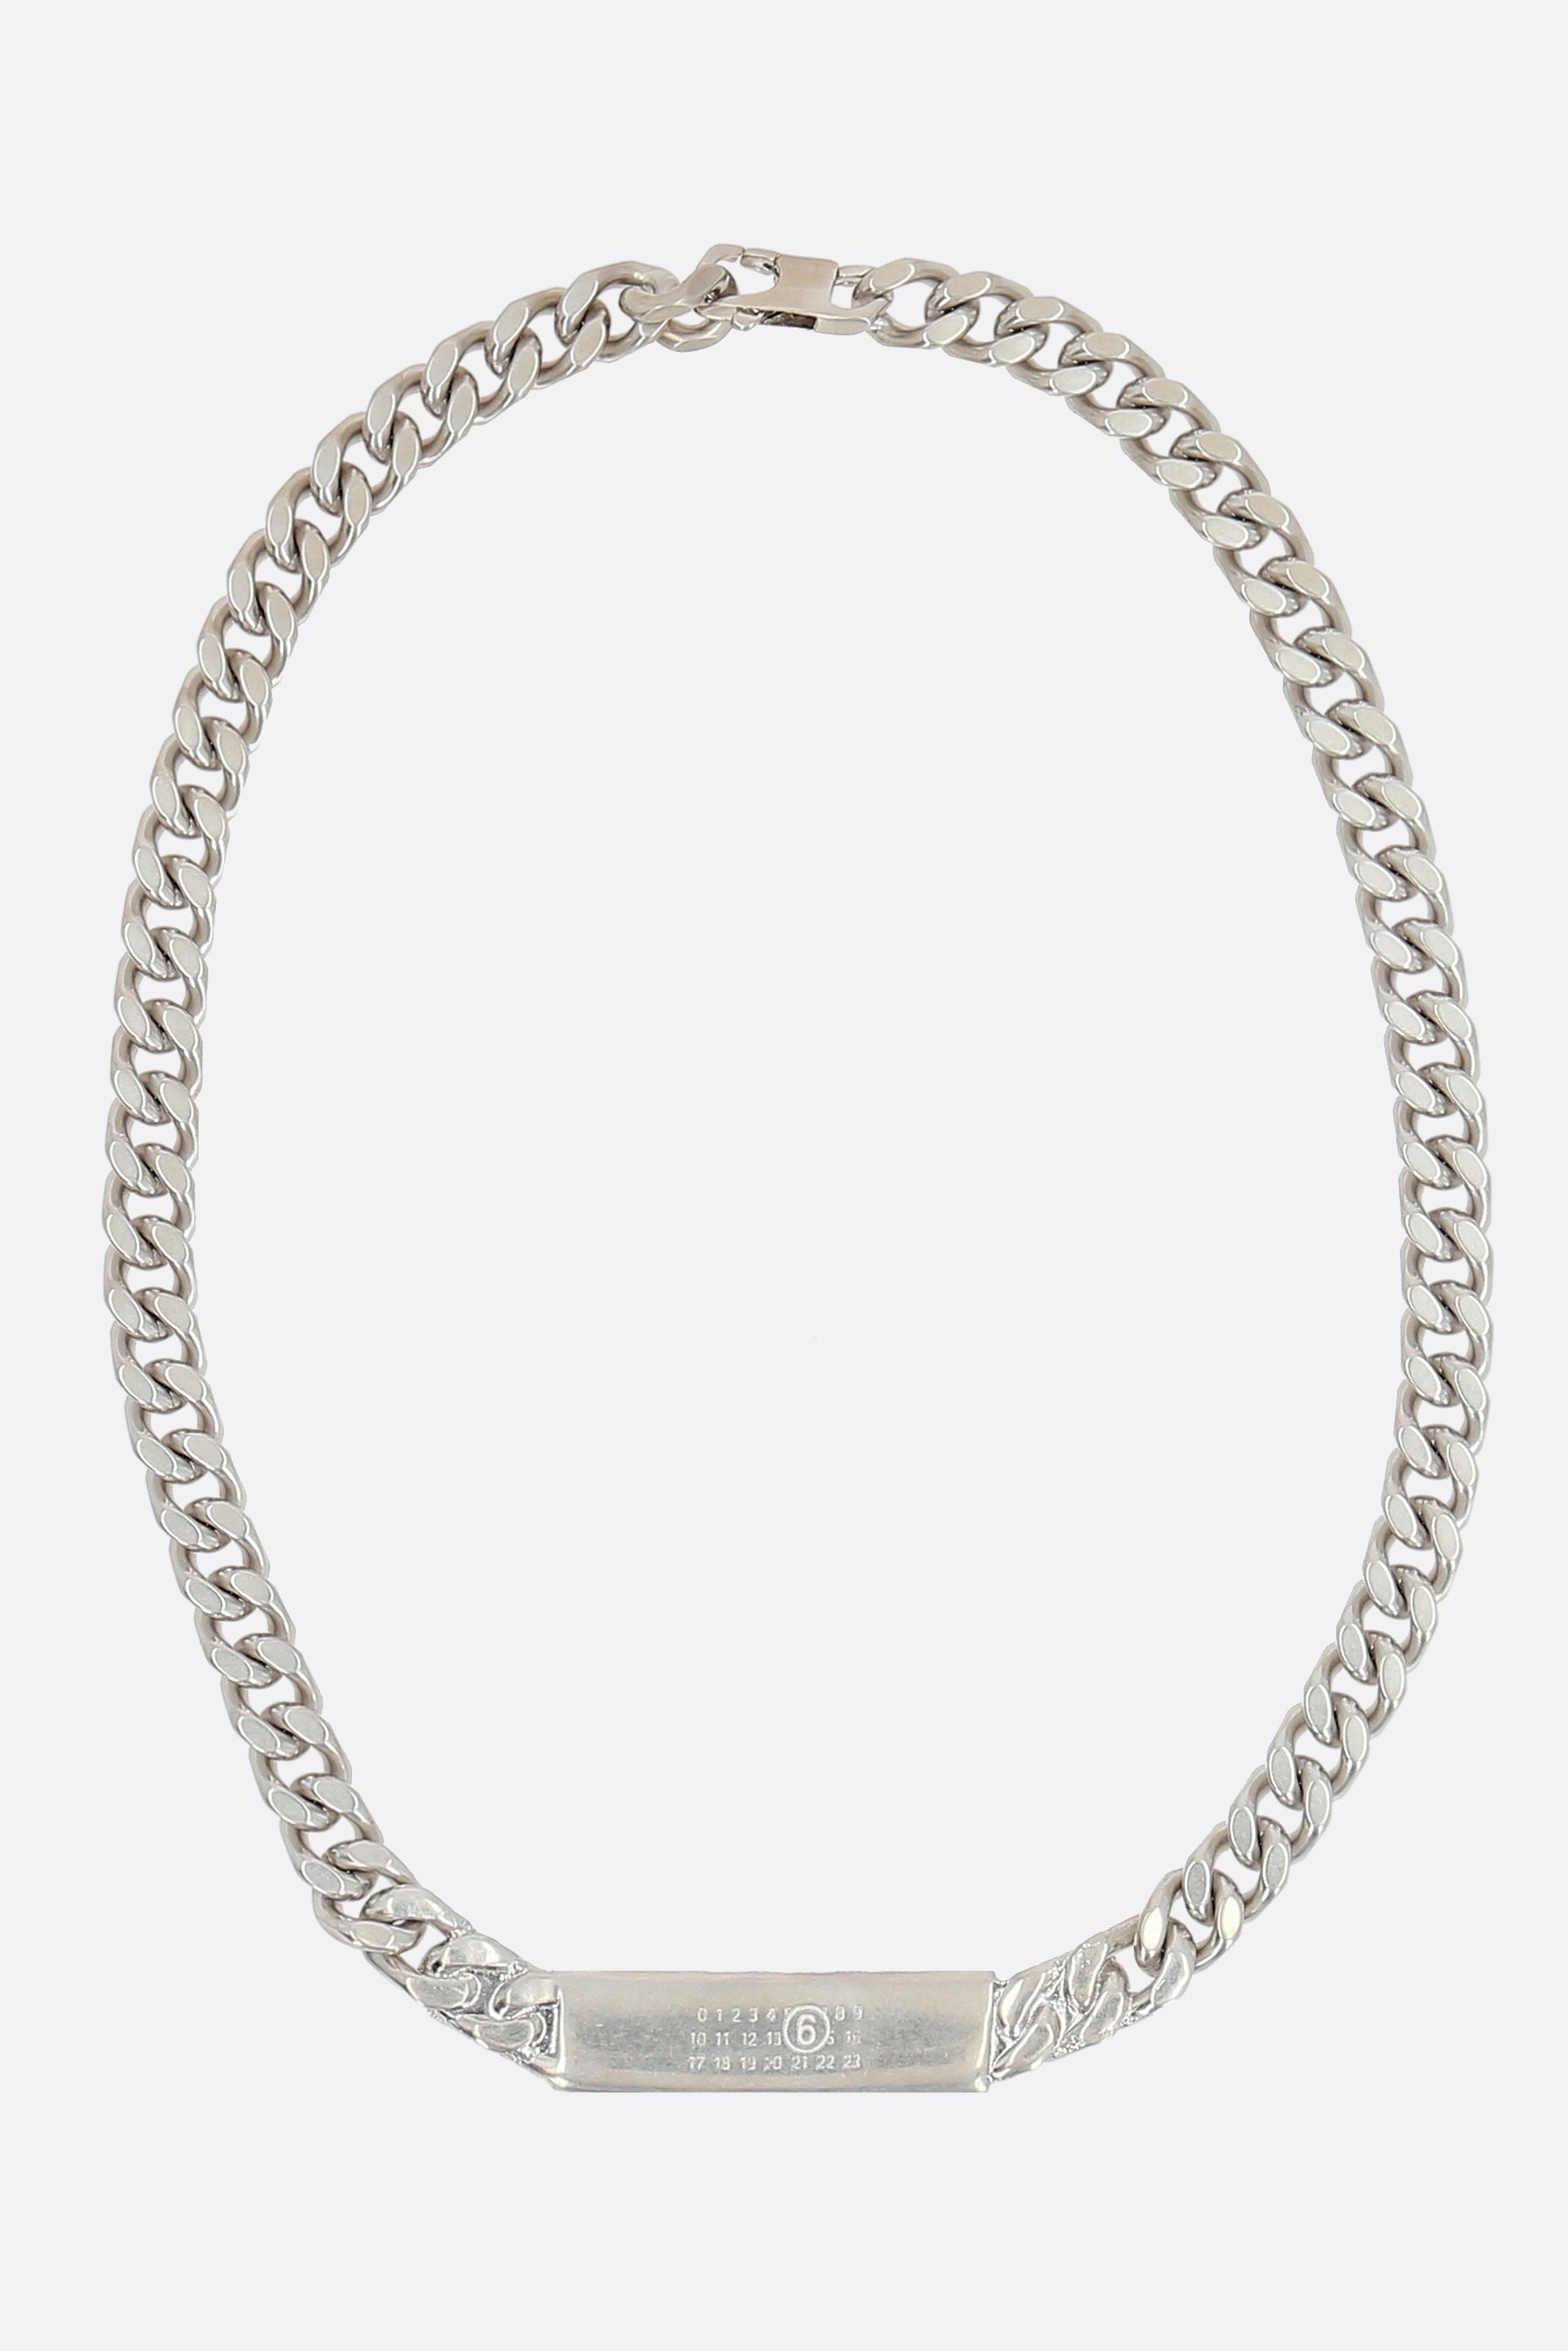 Foil brass chain necklace